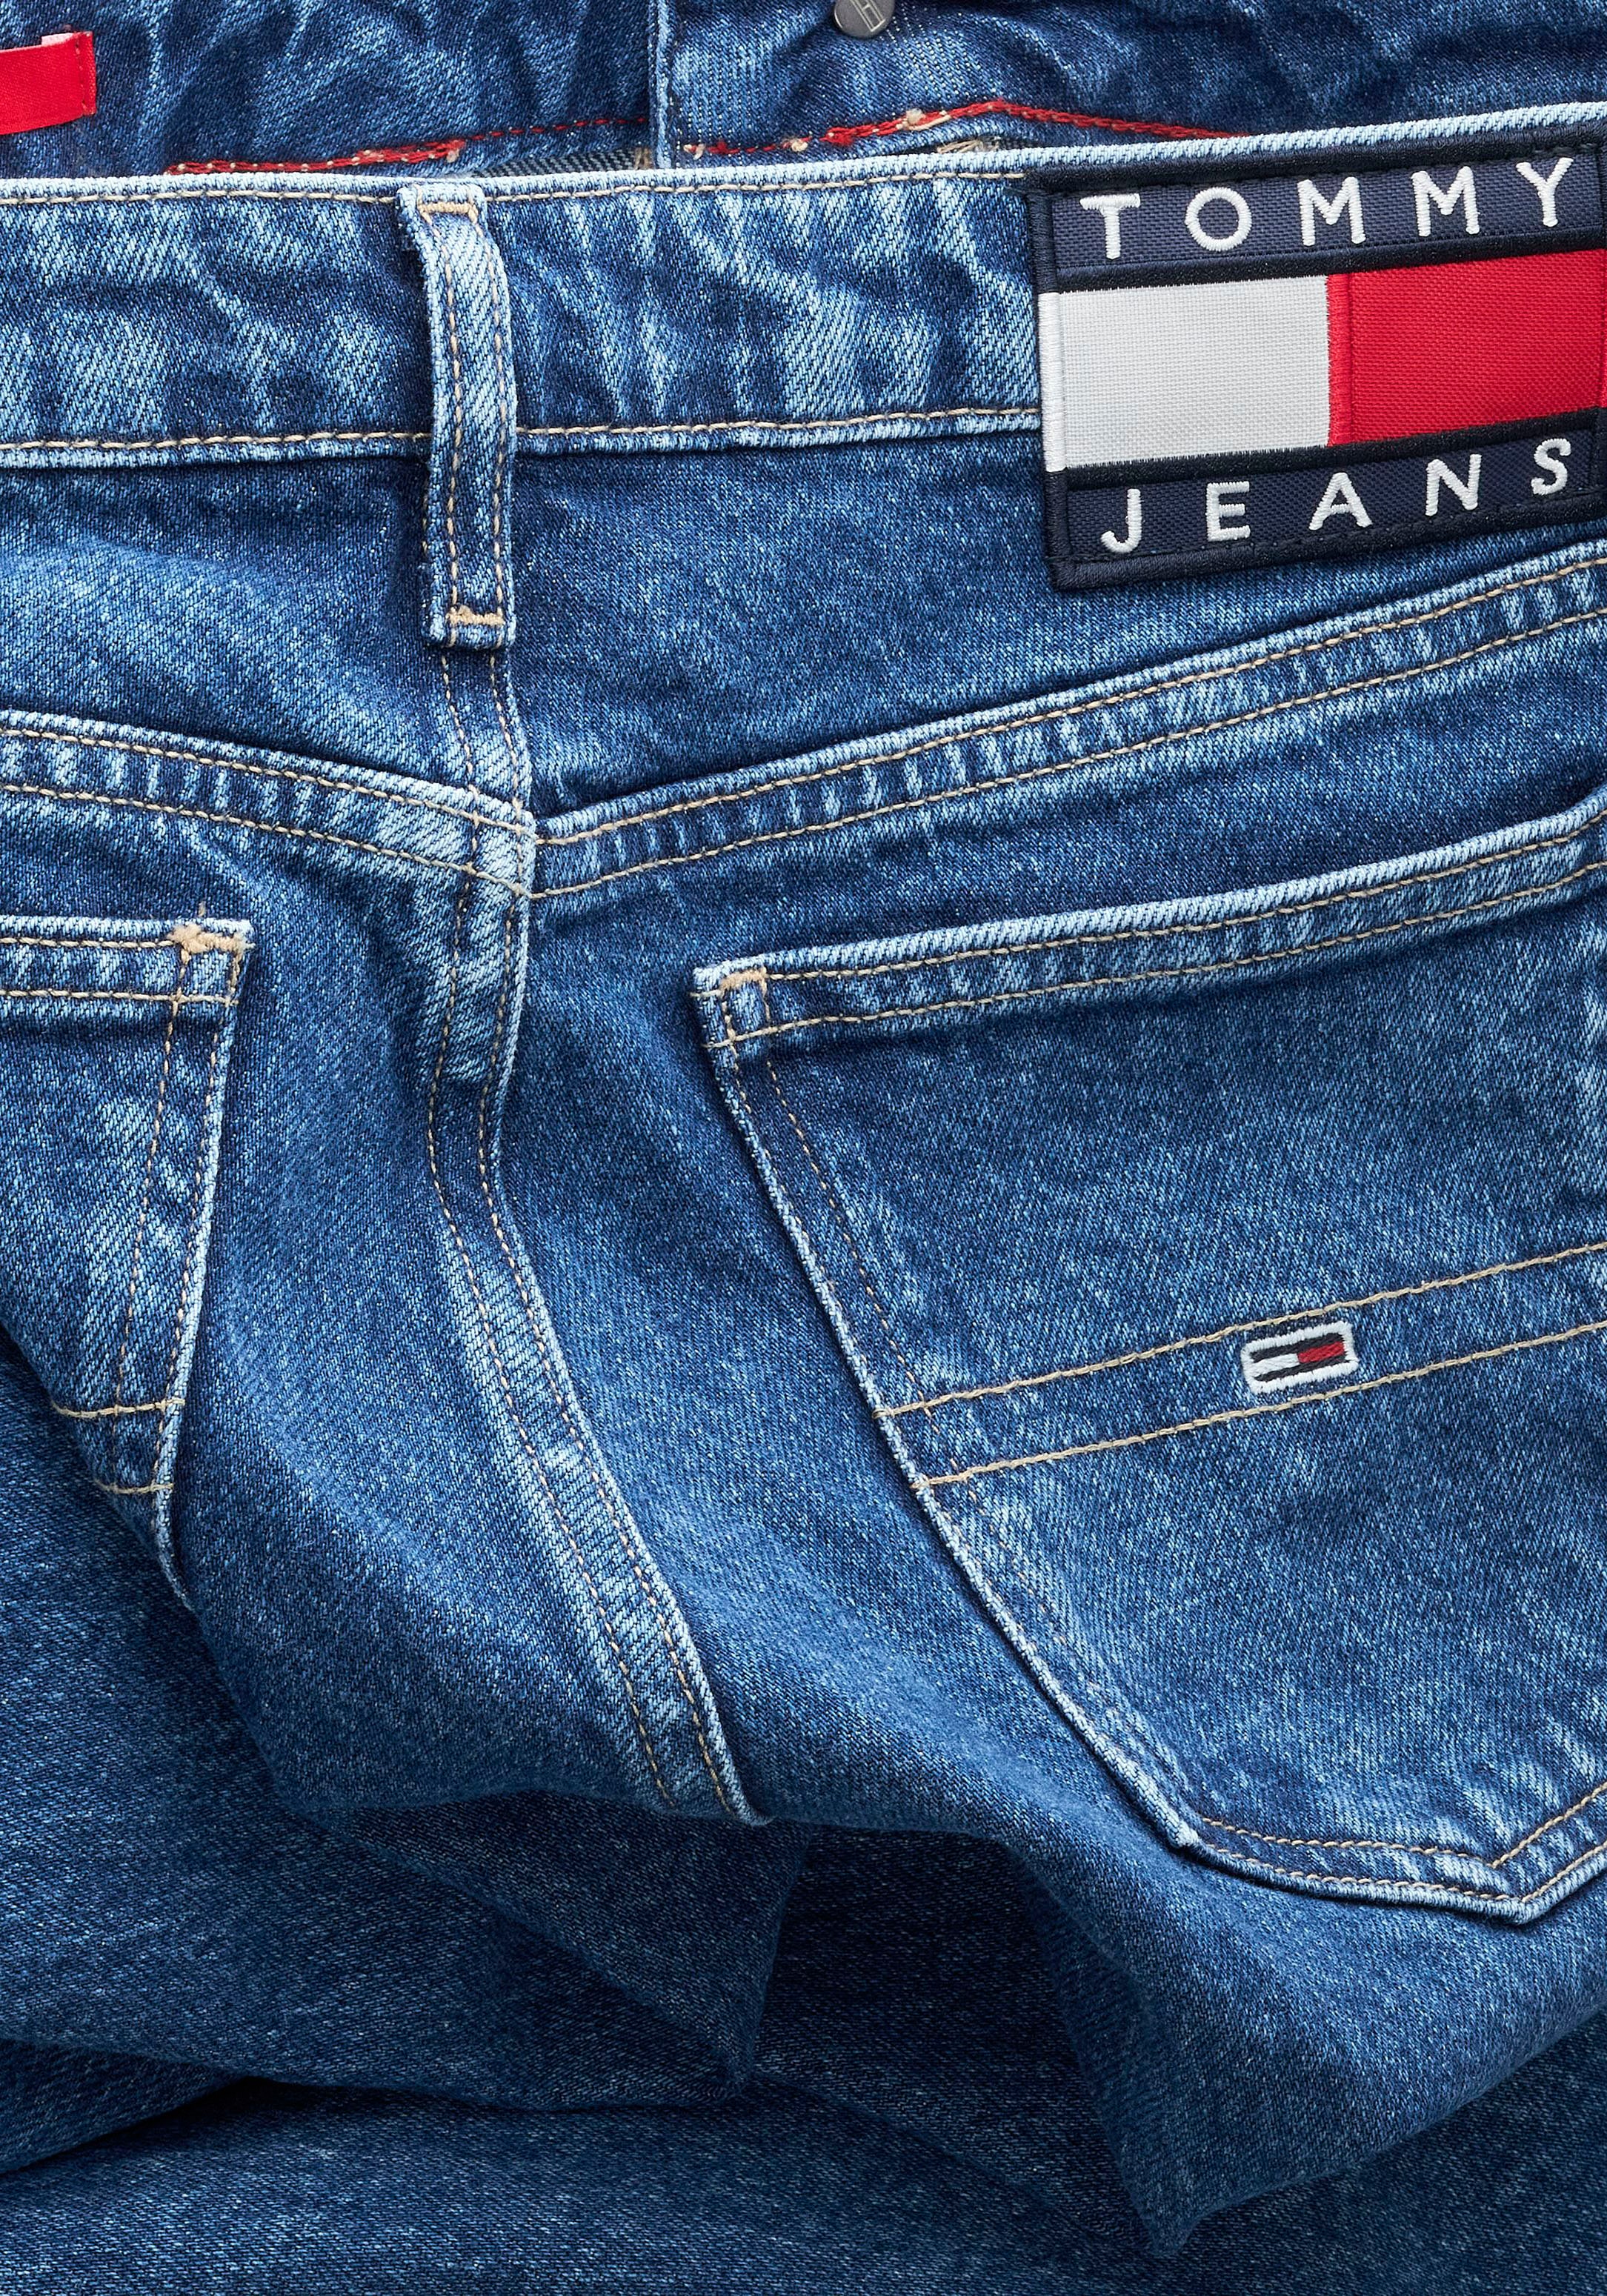 Logobadge Jeans mit Tommy OTTO bei Schlagjeans, kaufen Jeans Tommy online